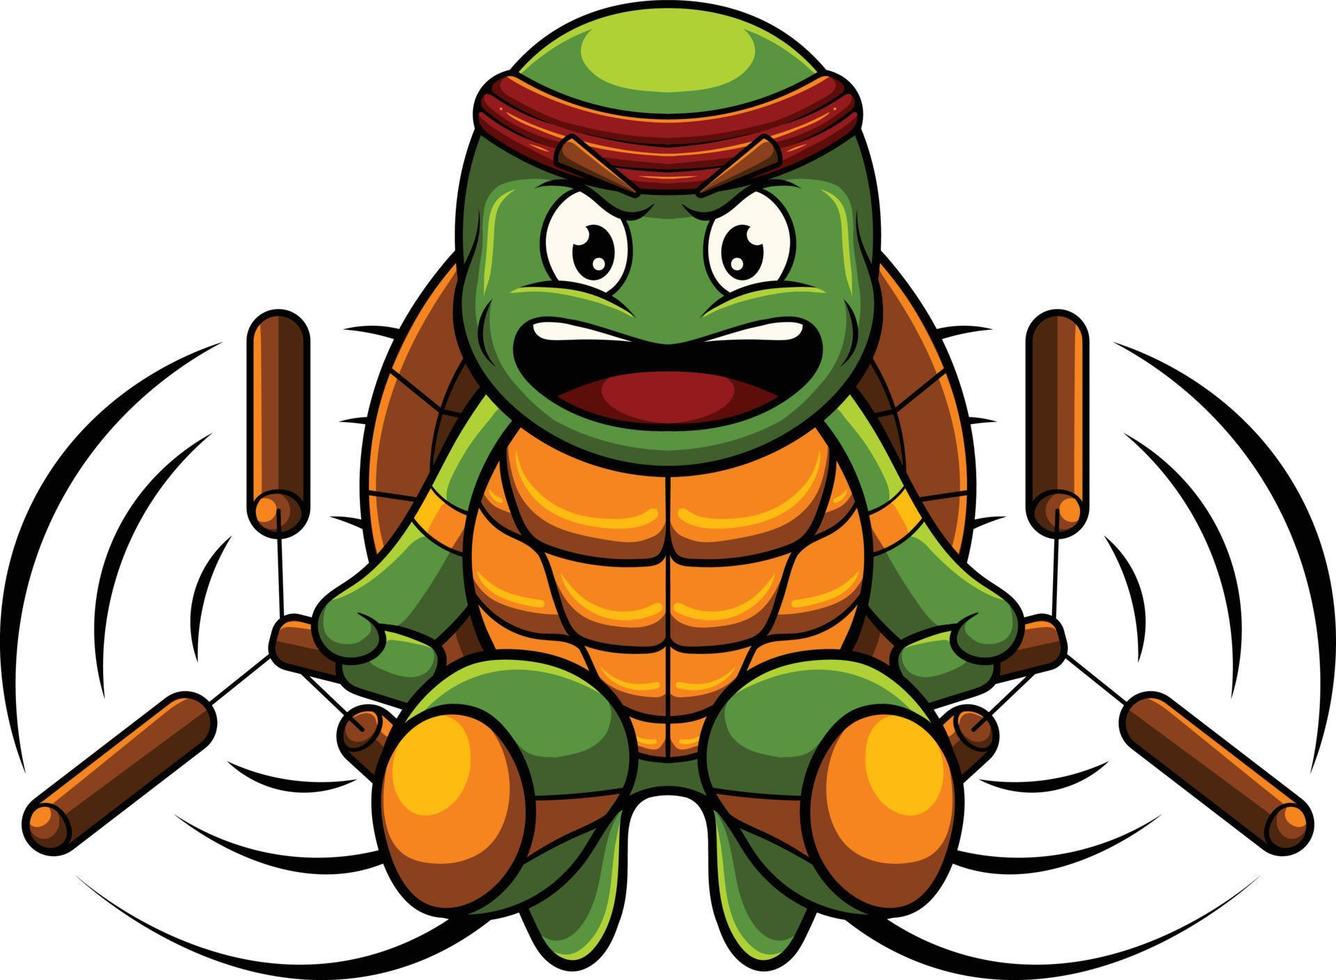 schildkrötenmaskottchenillustration mit ninja-pose vektor